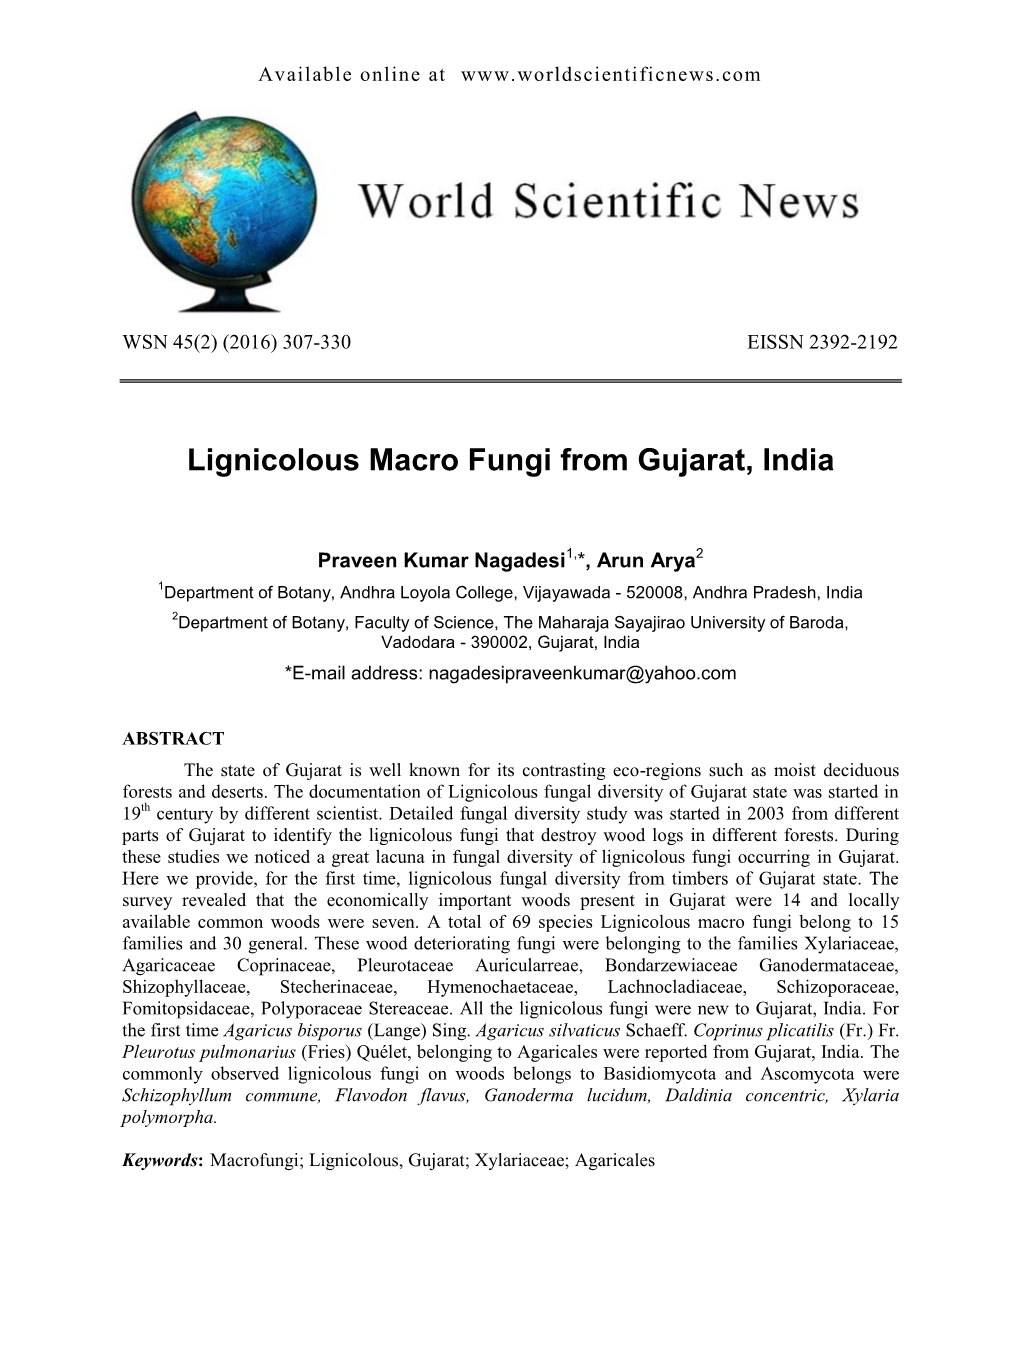 Lignicolous Macro Fungi from Gujarat, India